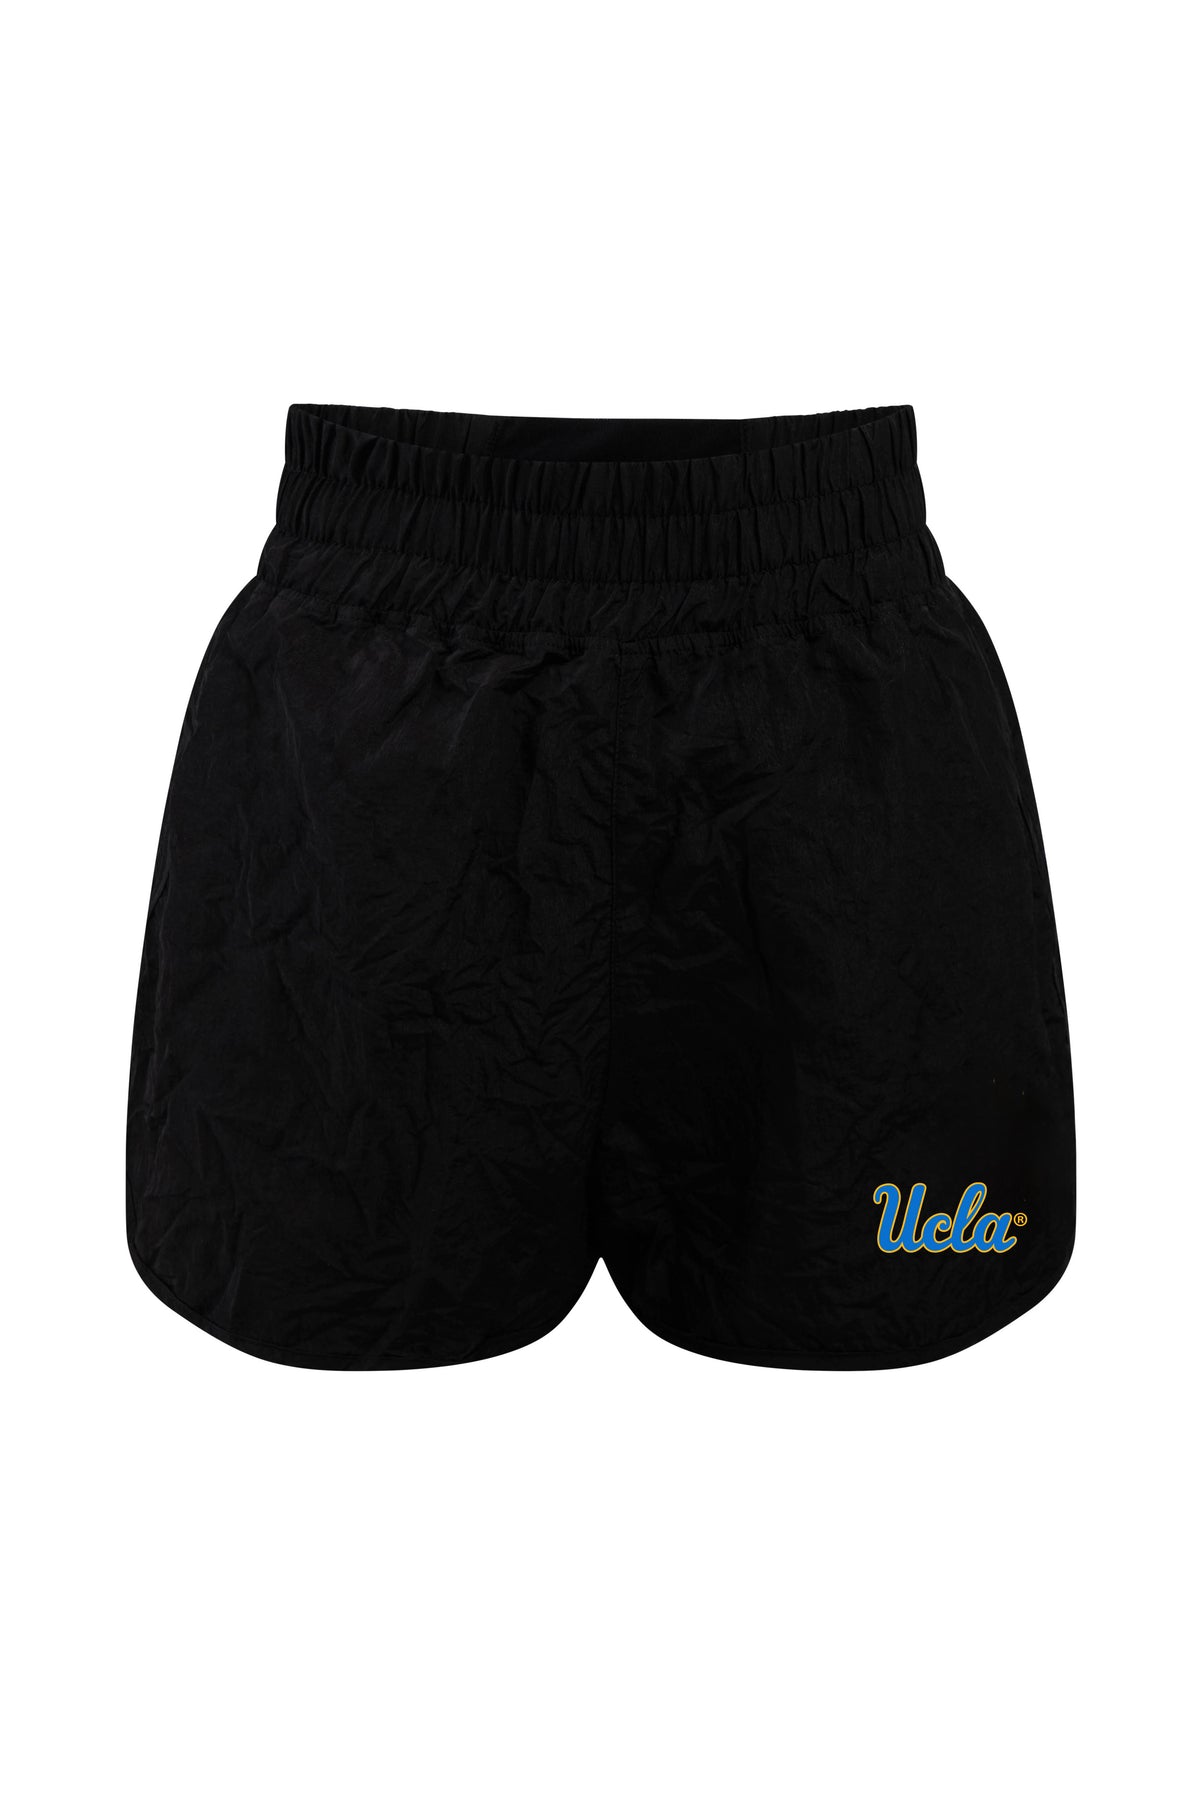 University of California Los Angeles Boxer Short